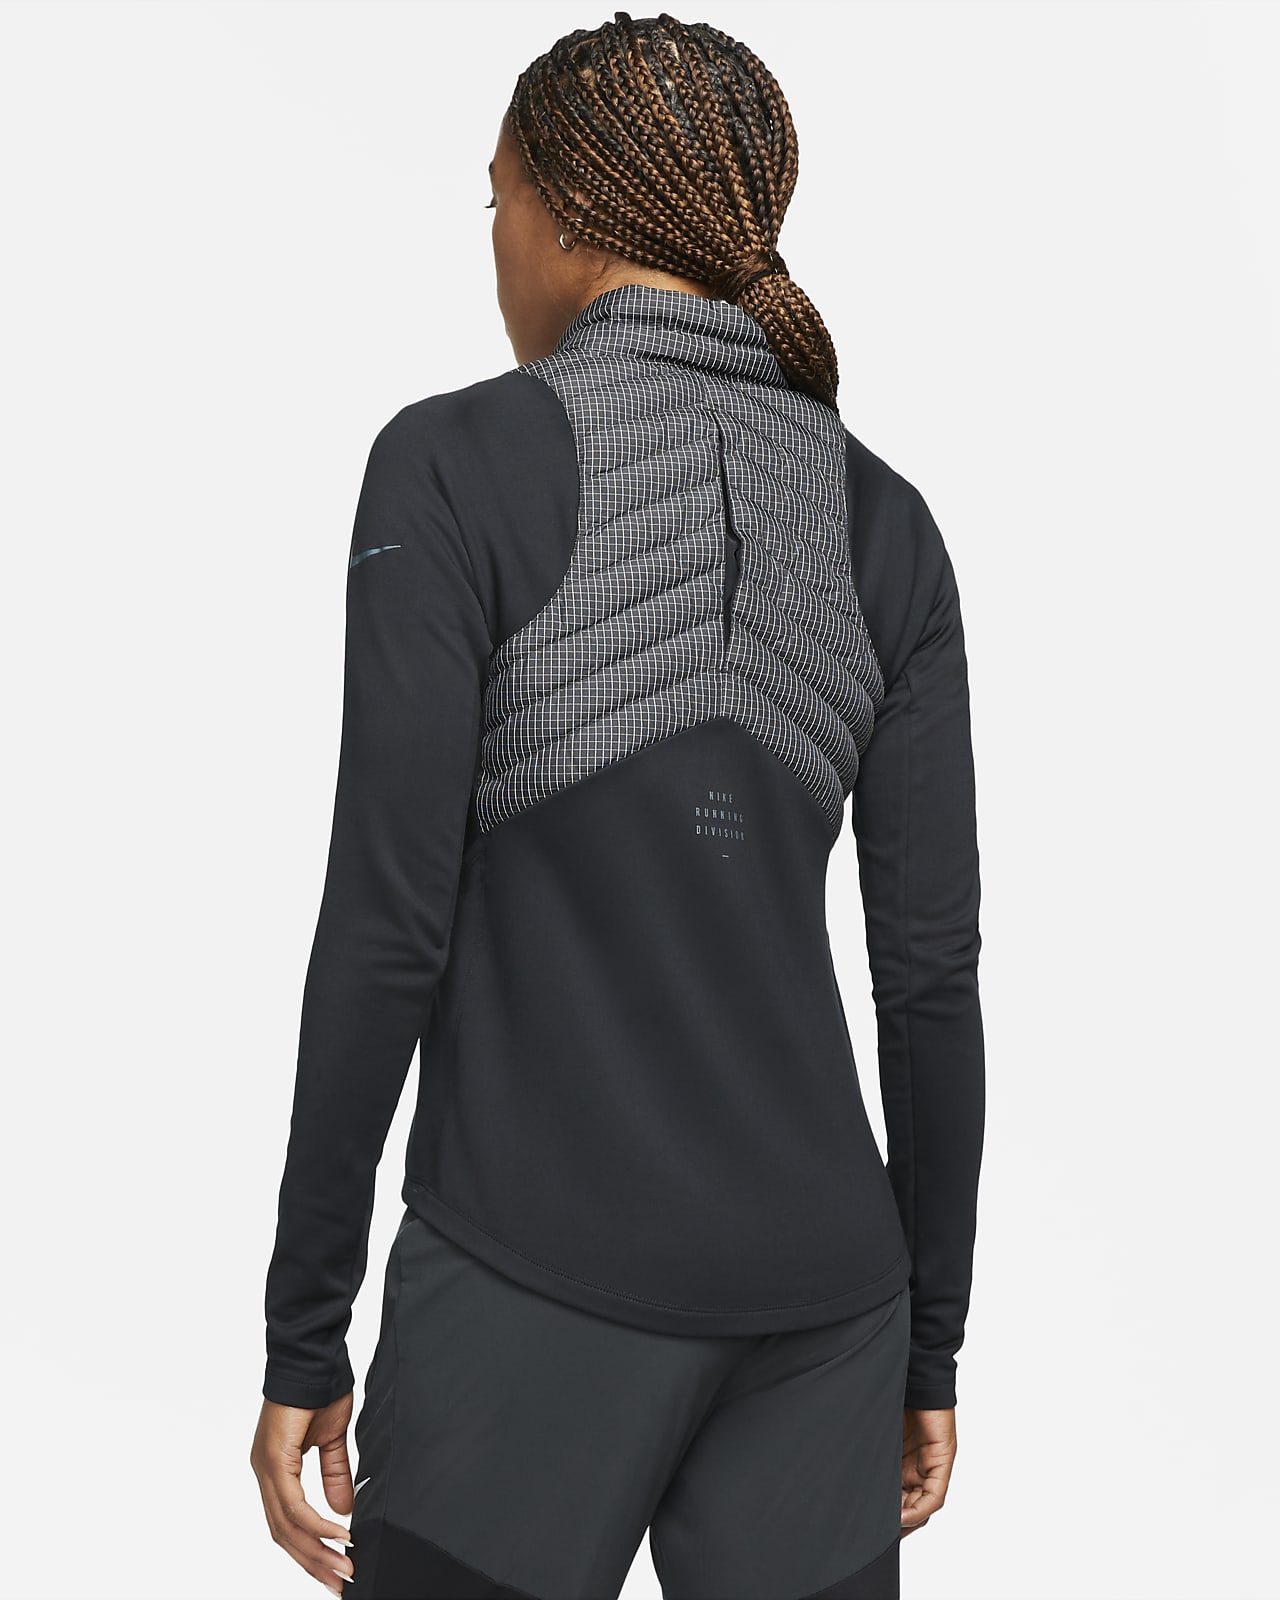 Nike Therma-FIT Run Division Women's Hybrid Running Jacket. Nike NZ